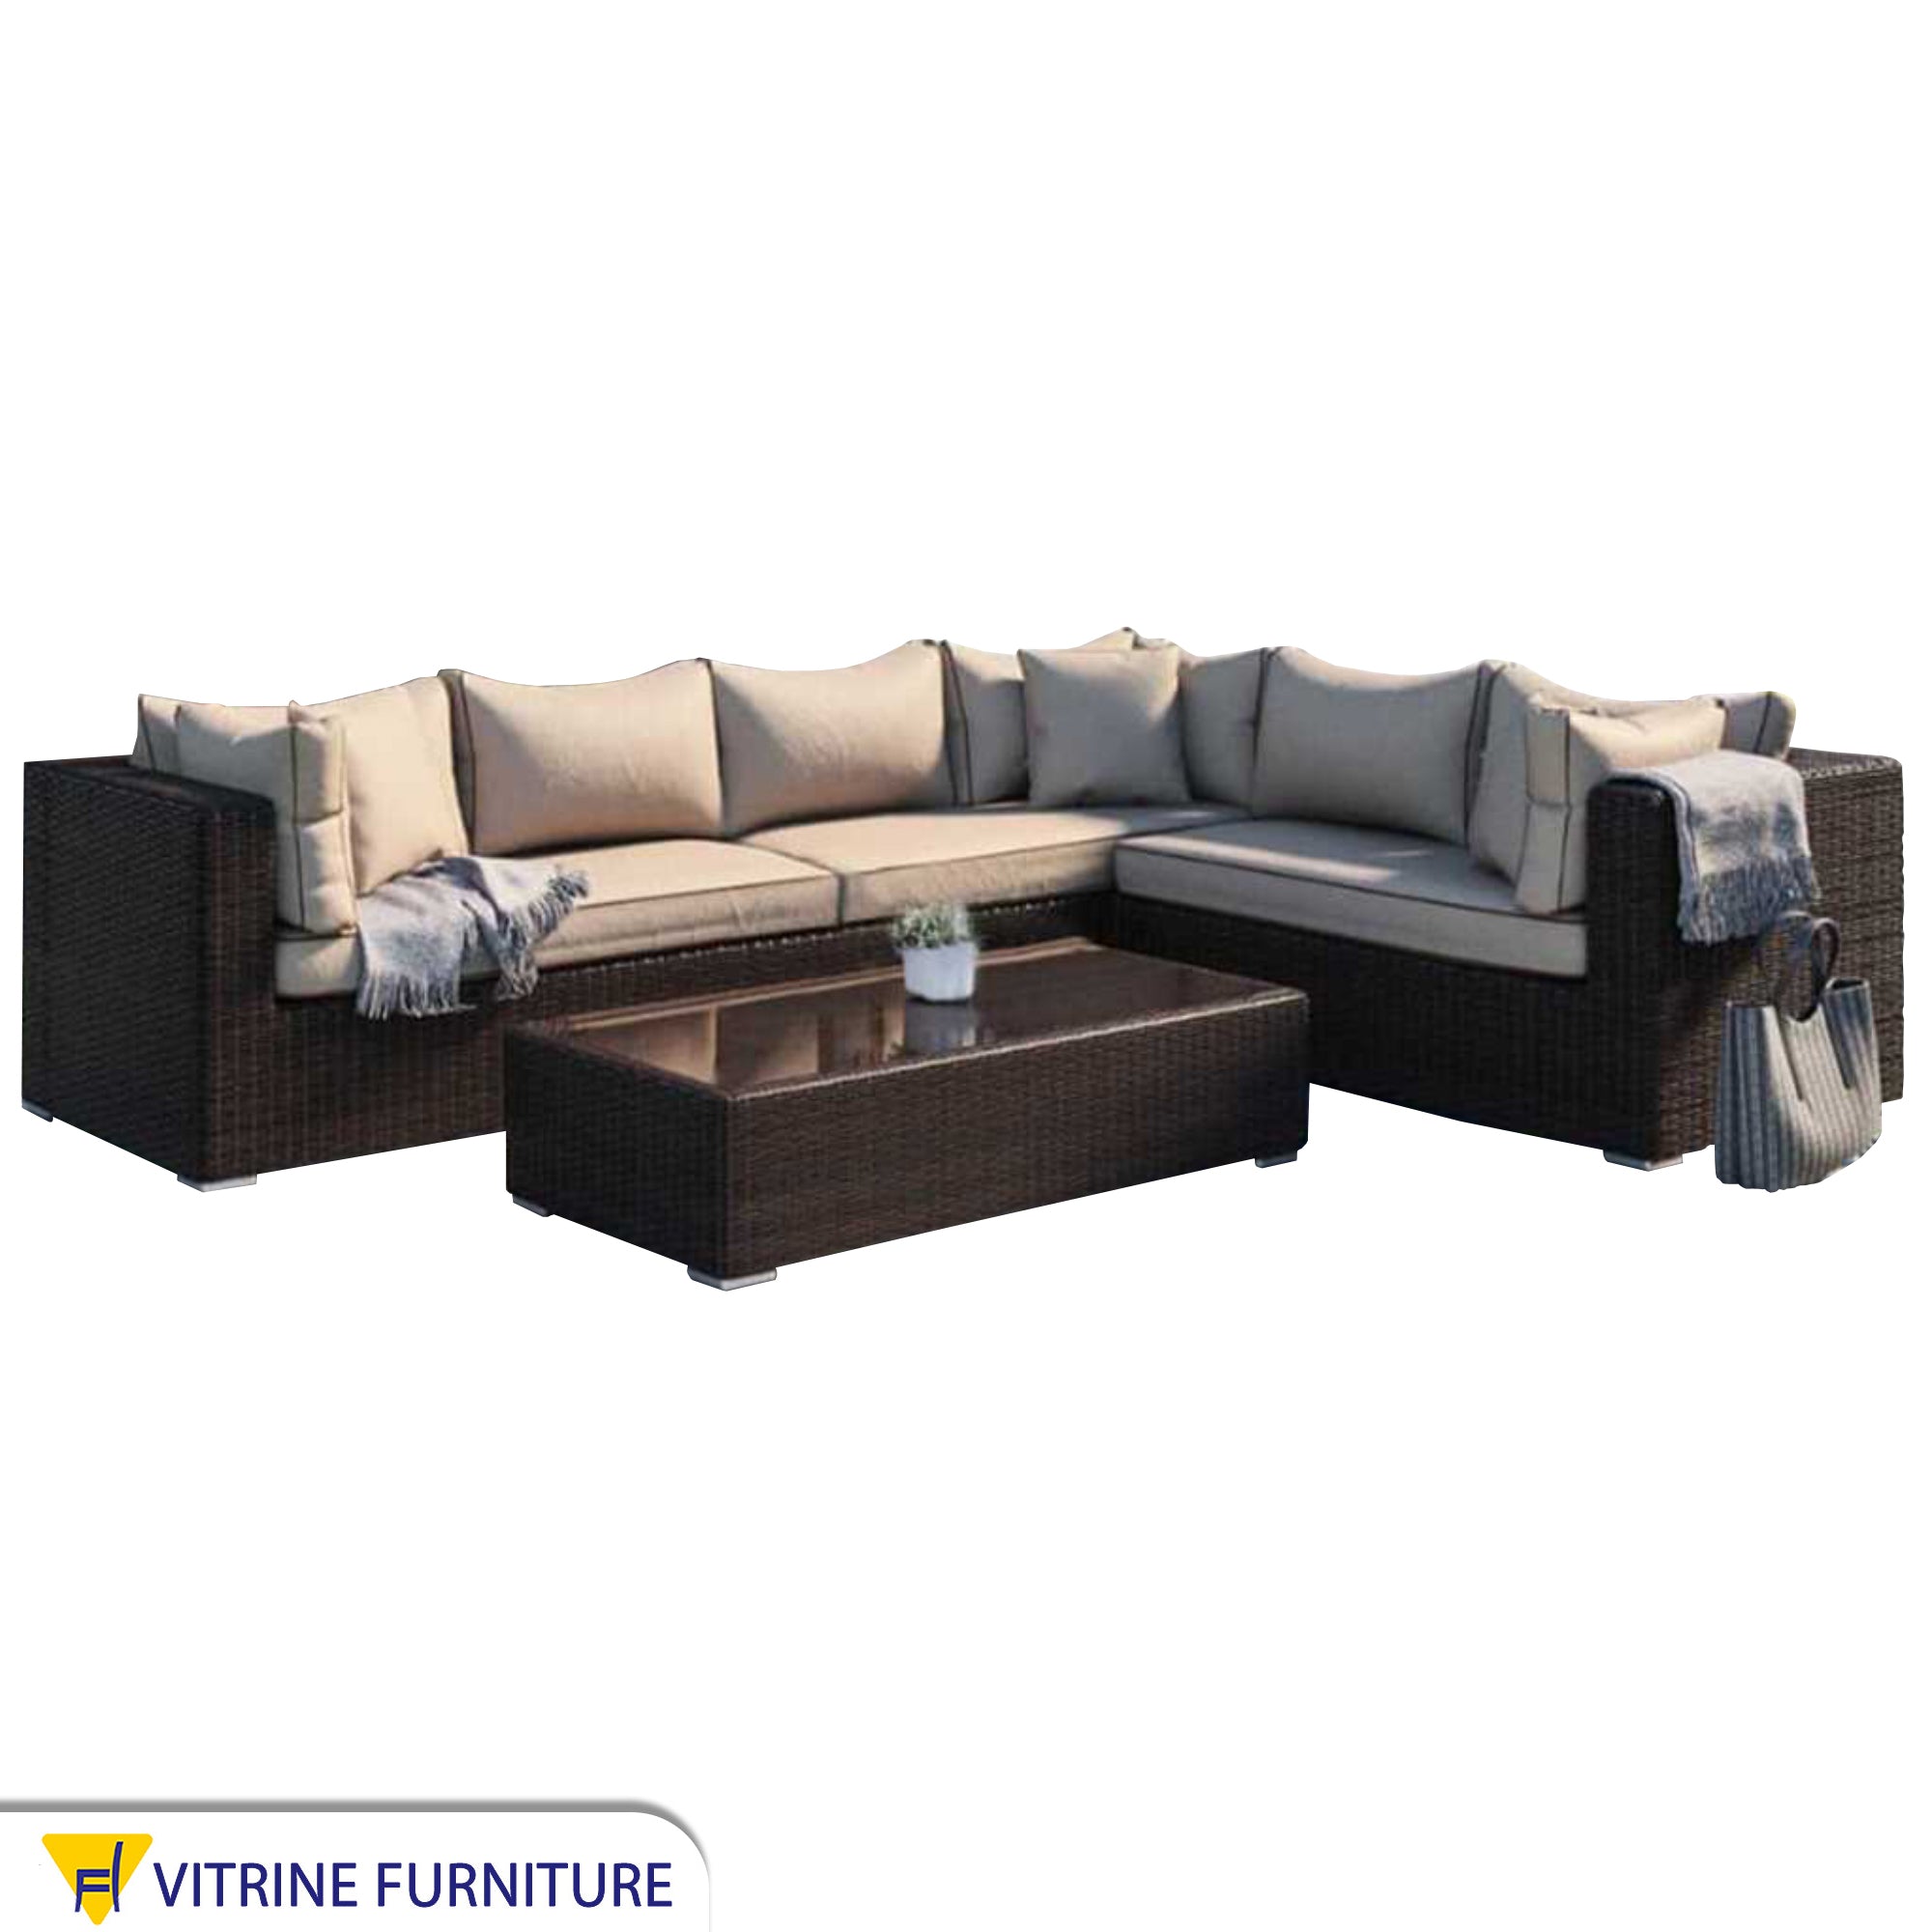 Rattan L-shaped corner seating set